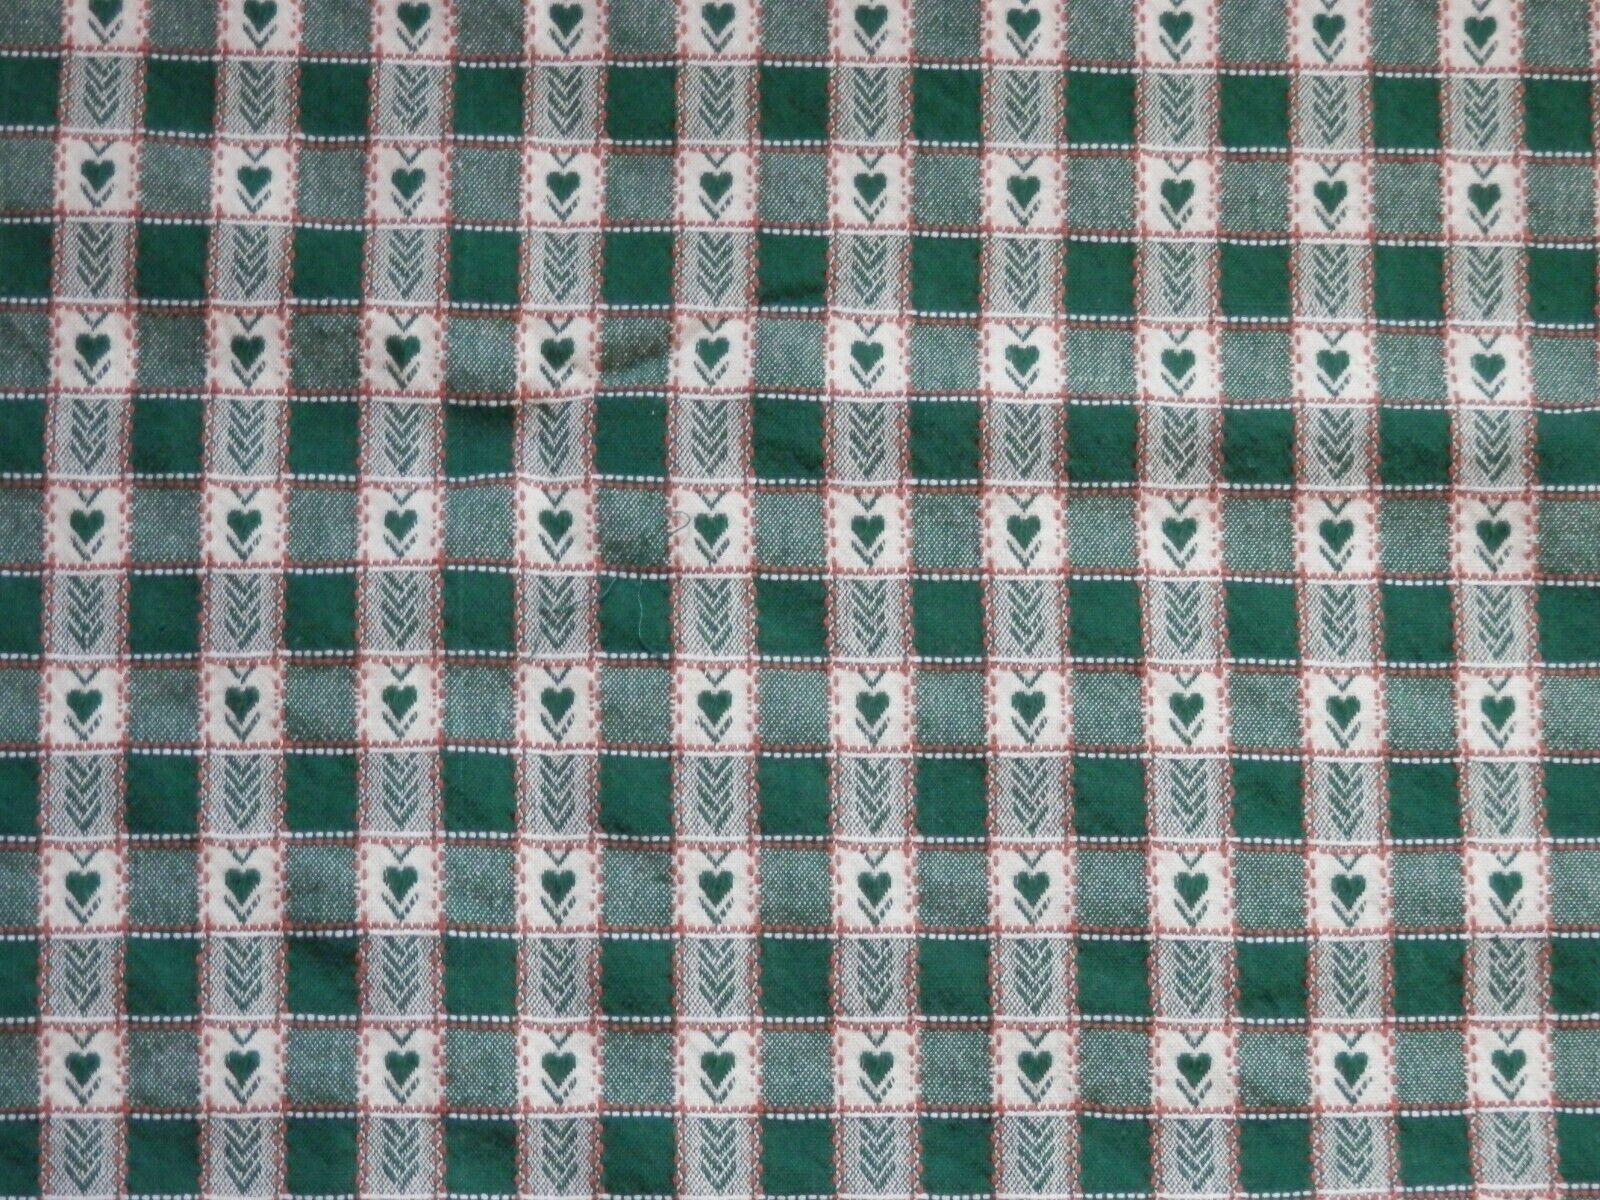 Country Hearts Tablecloth Green Cream 100% Cotton x 58 camping 2022秋冬新作 picnic 超人気 専門店 inch 78